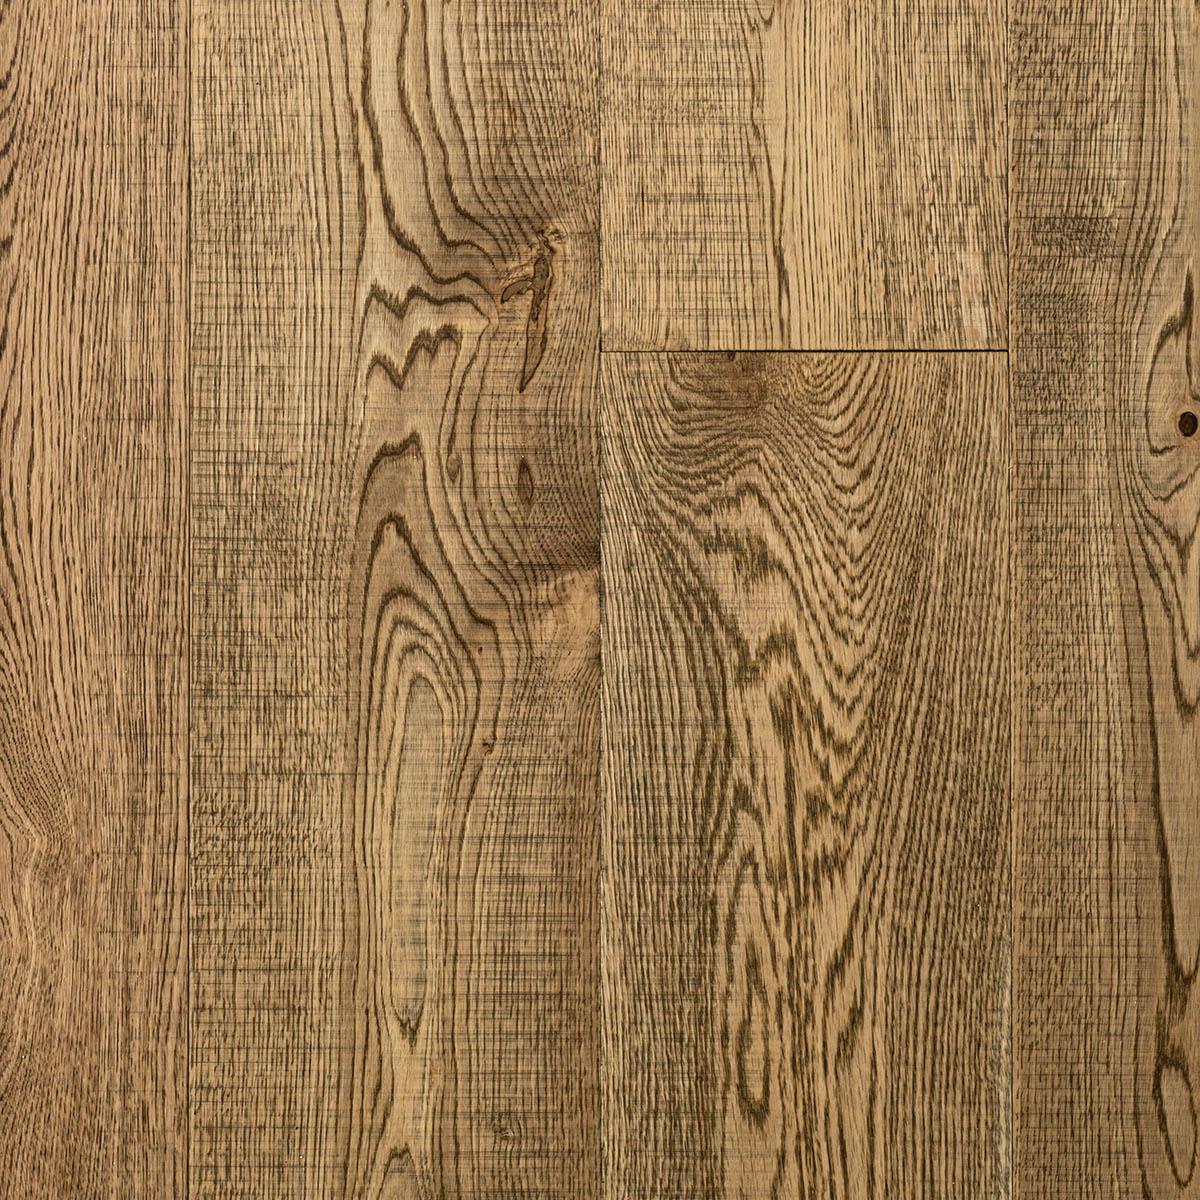 Beatty Drive - Skipsawn Engineered Oak Floor